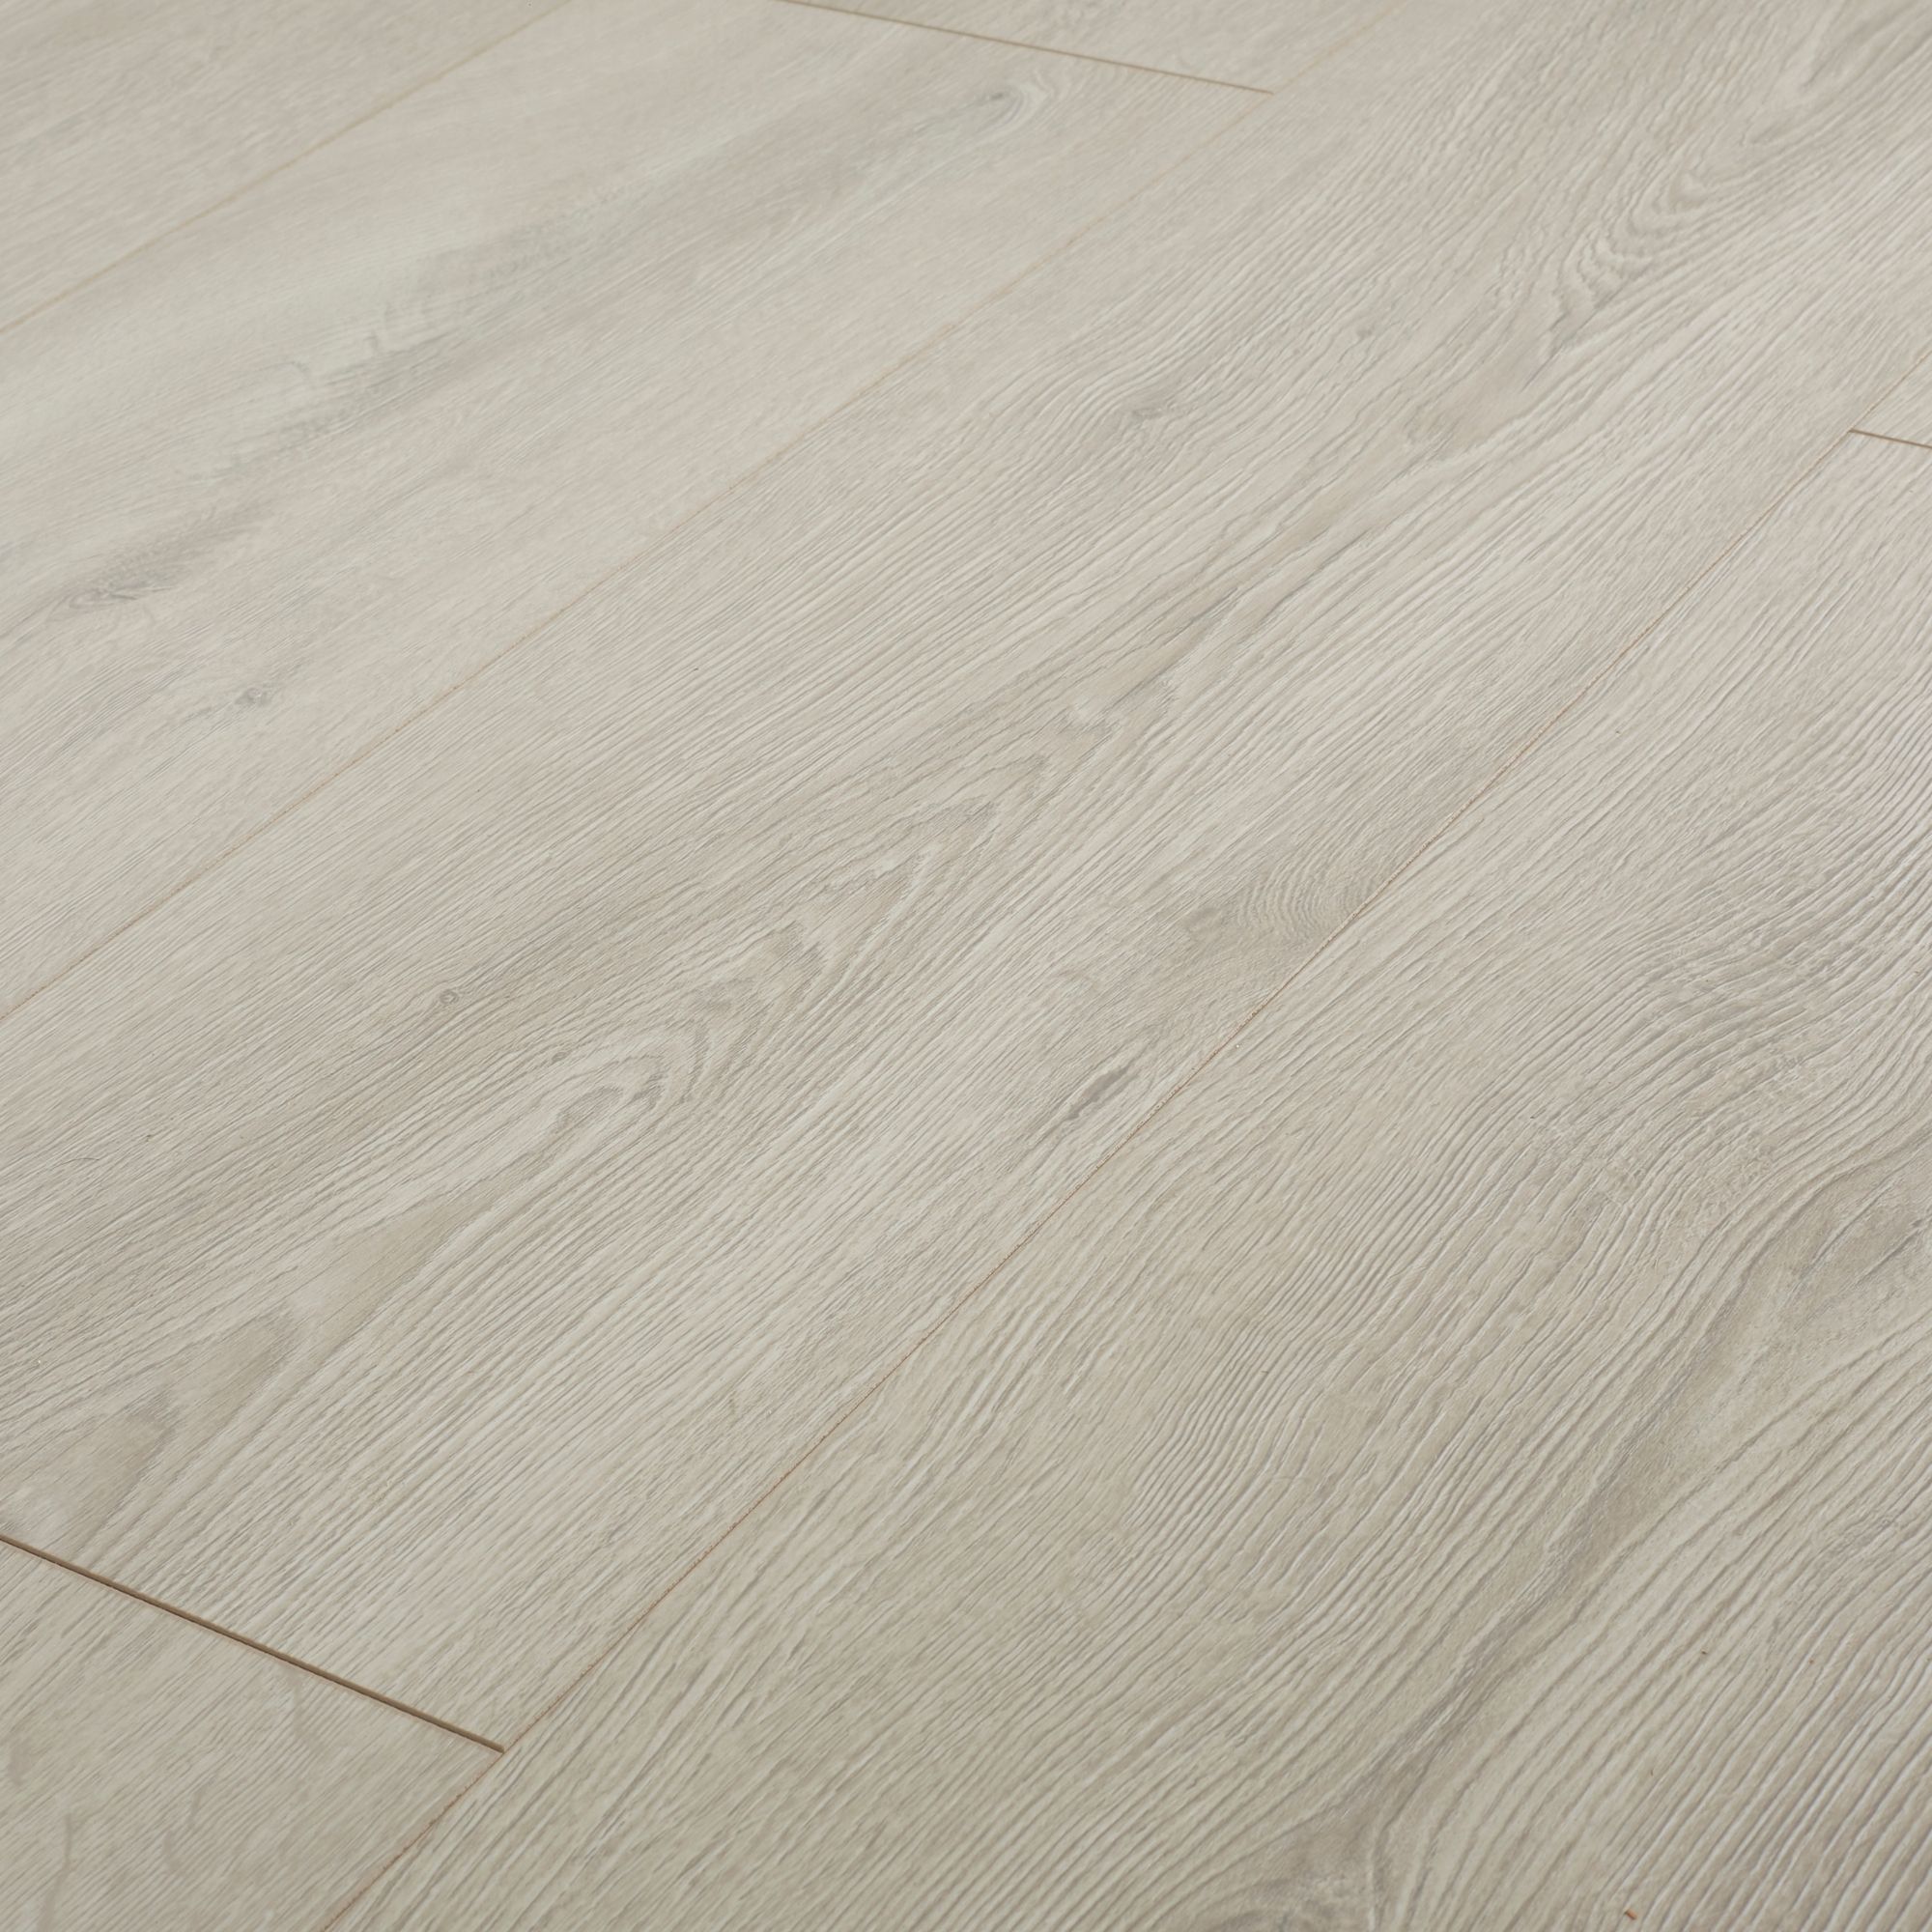 Goodhome Newlyn Grey Oak Effect Laminate Flooring 1 68m Pack